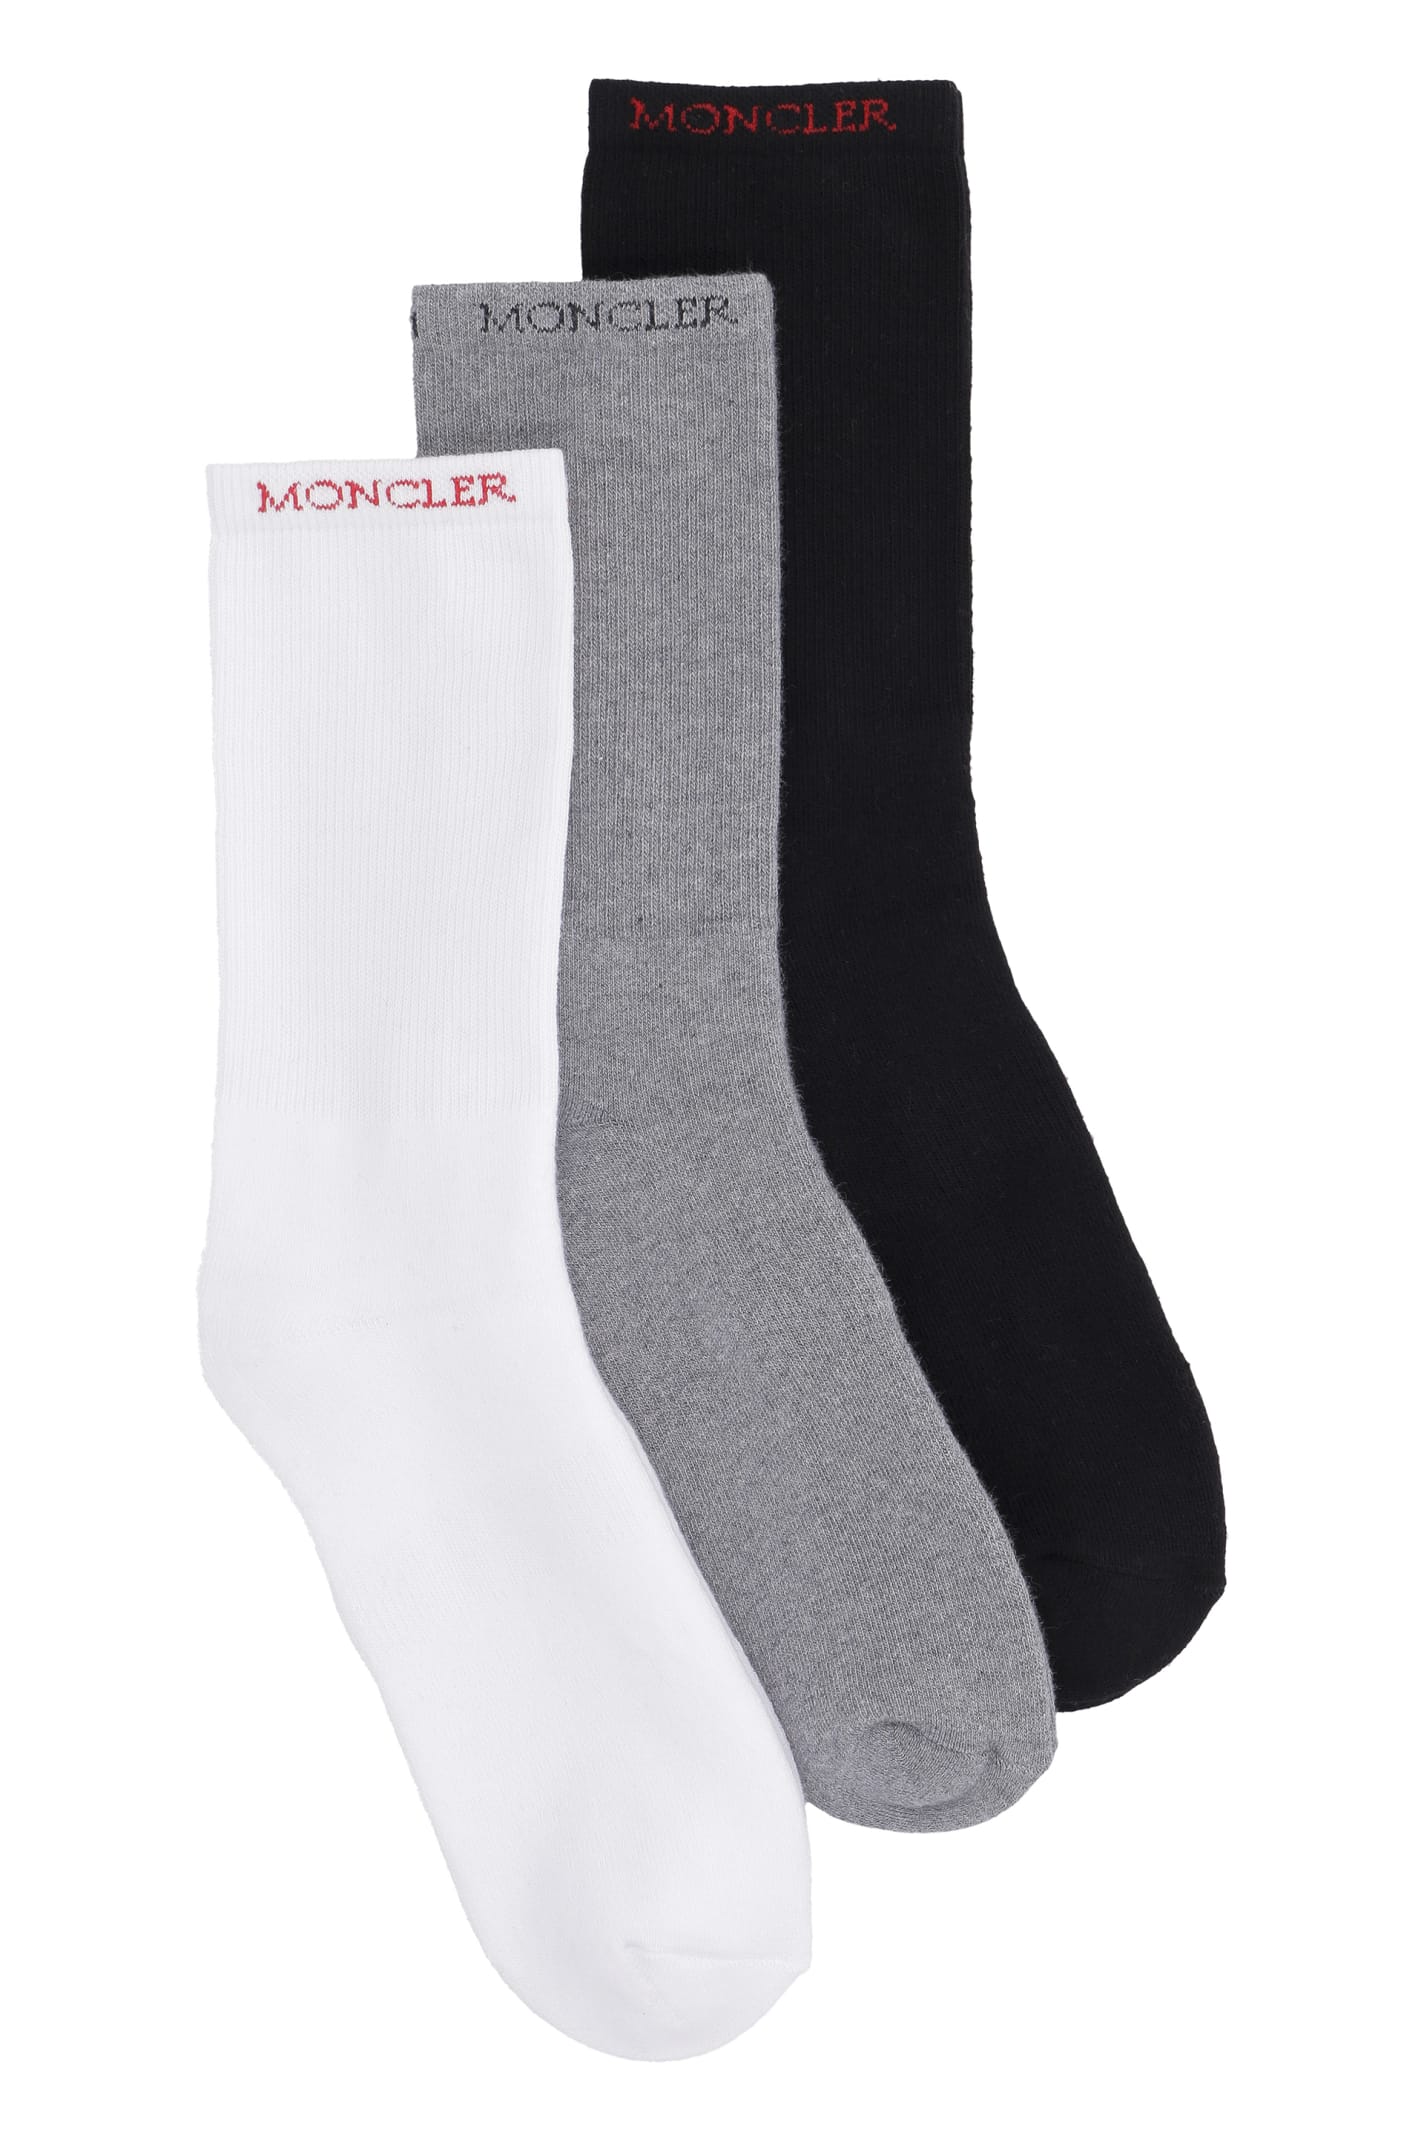 Moncler Genius Set Of Three Socks